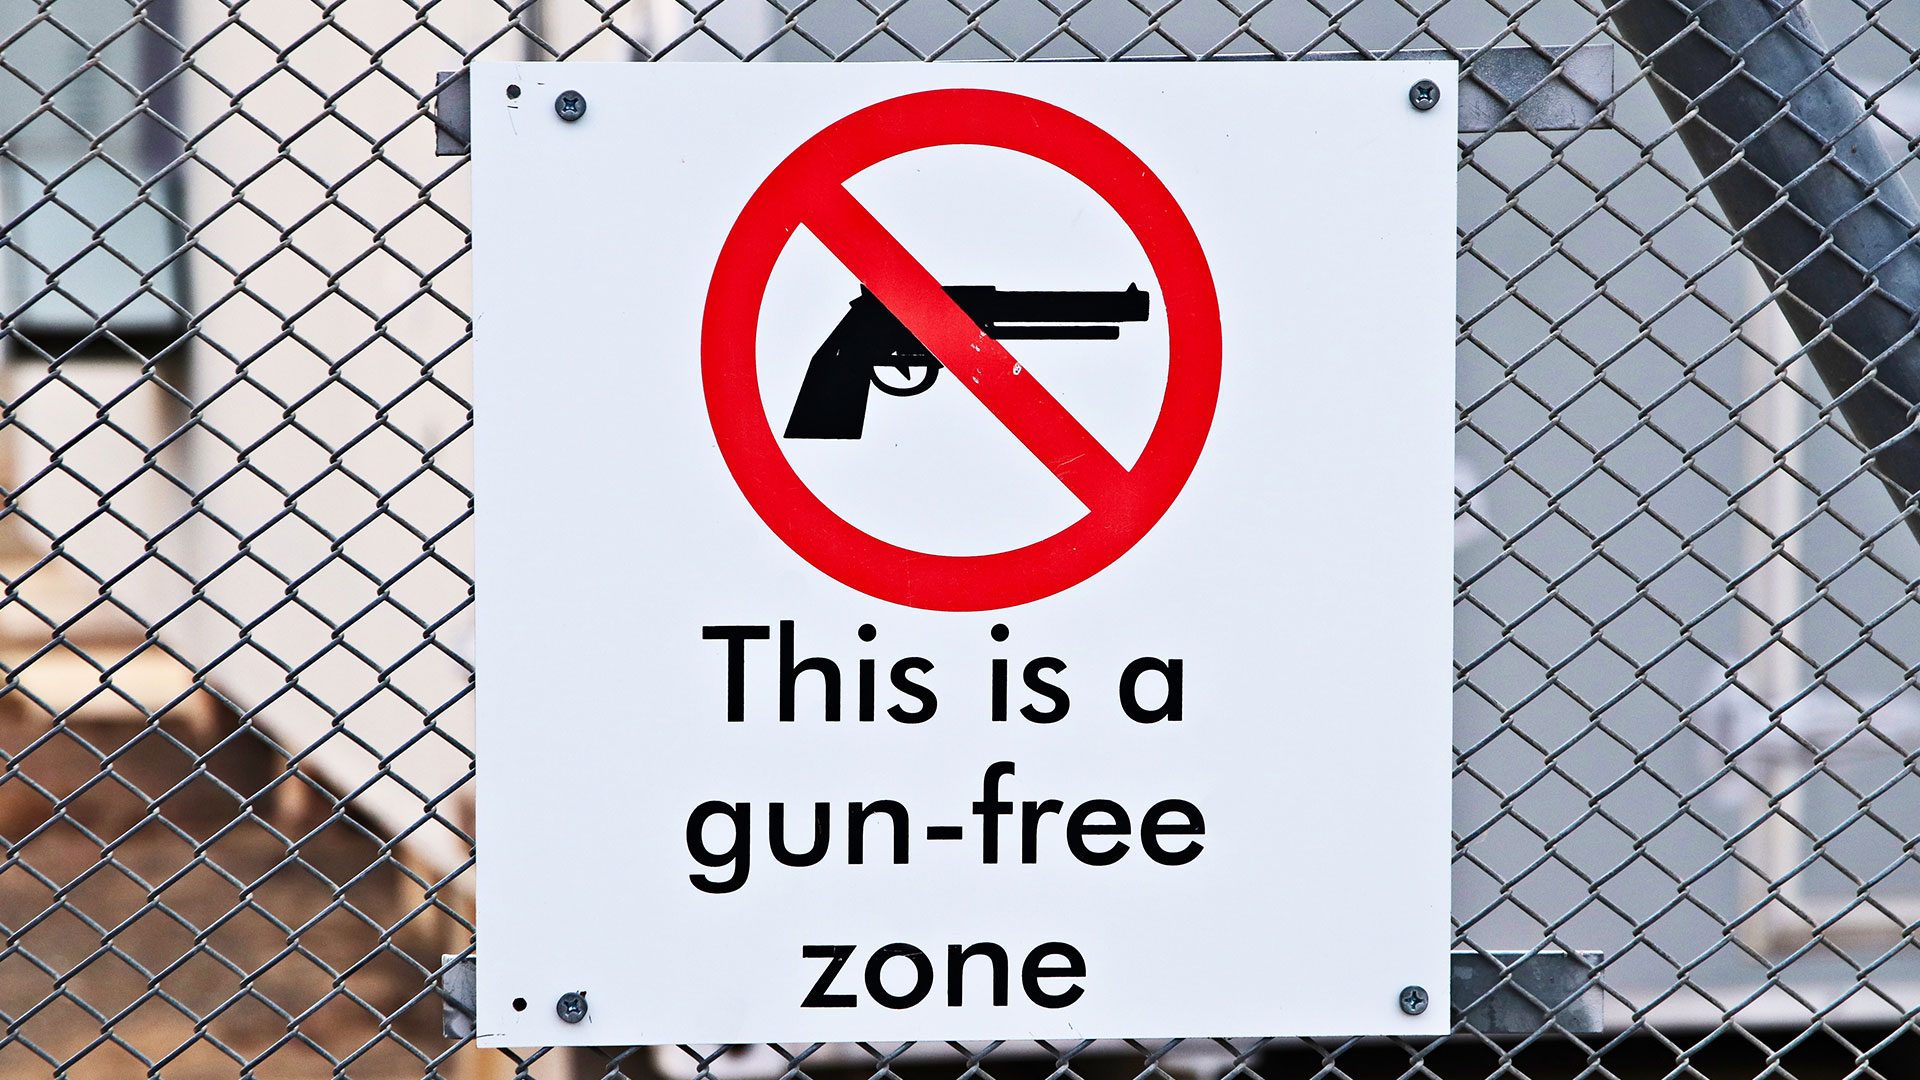 Canada to ban handgun import until passage of gun control law